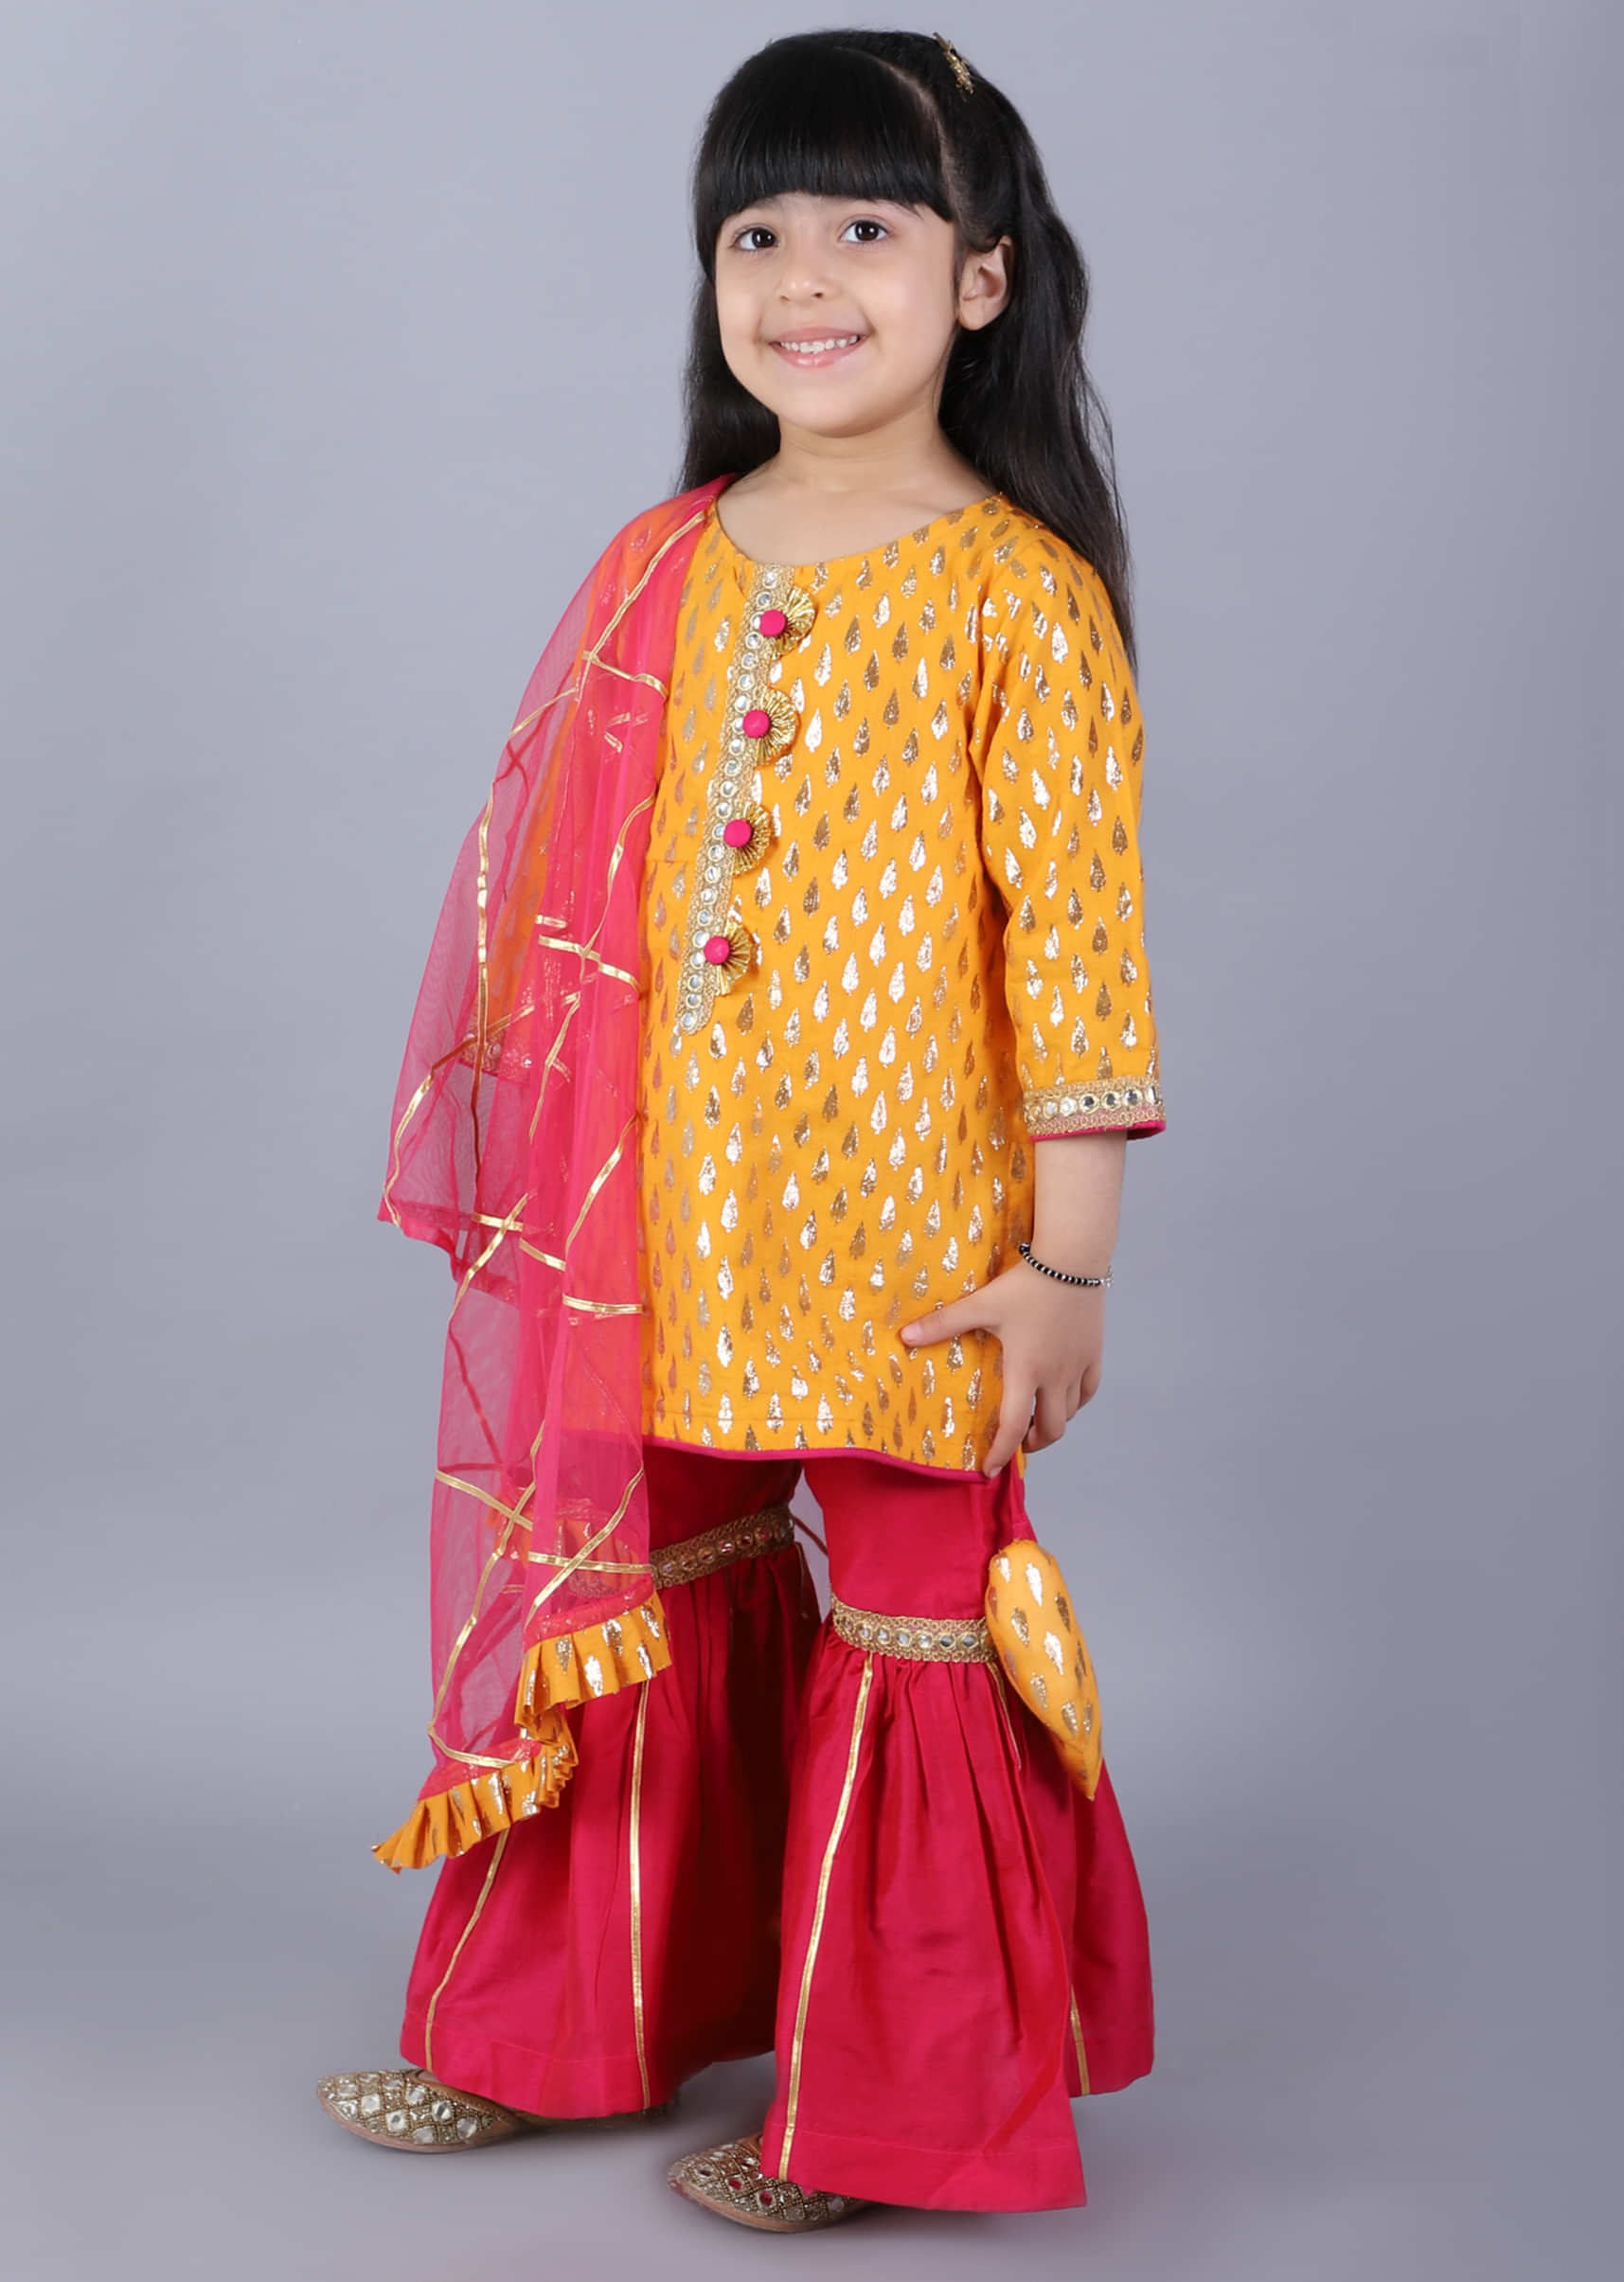 Kalki Girls Yellow Sharara Suit In Cotton With Zari Work And Contrasting Sharara Pants And Dupatta